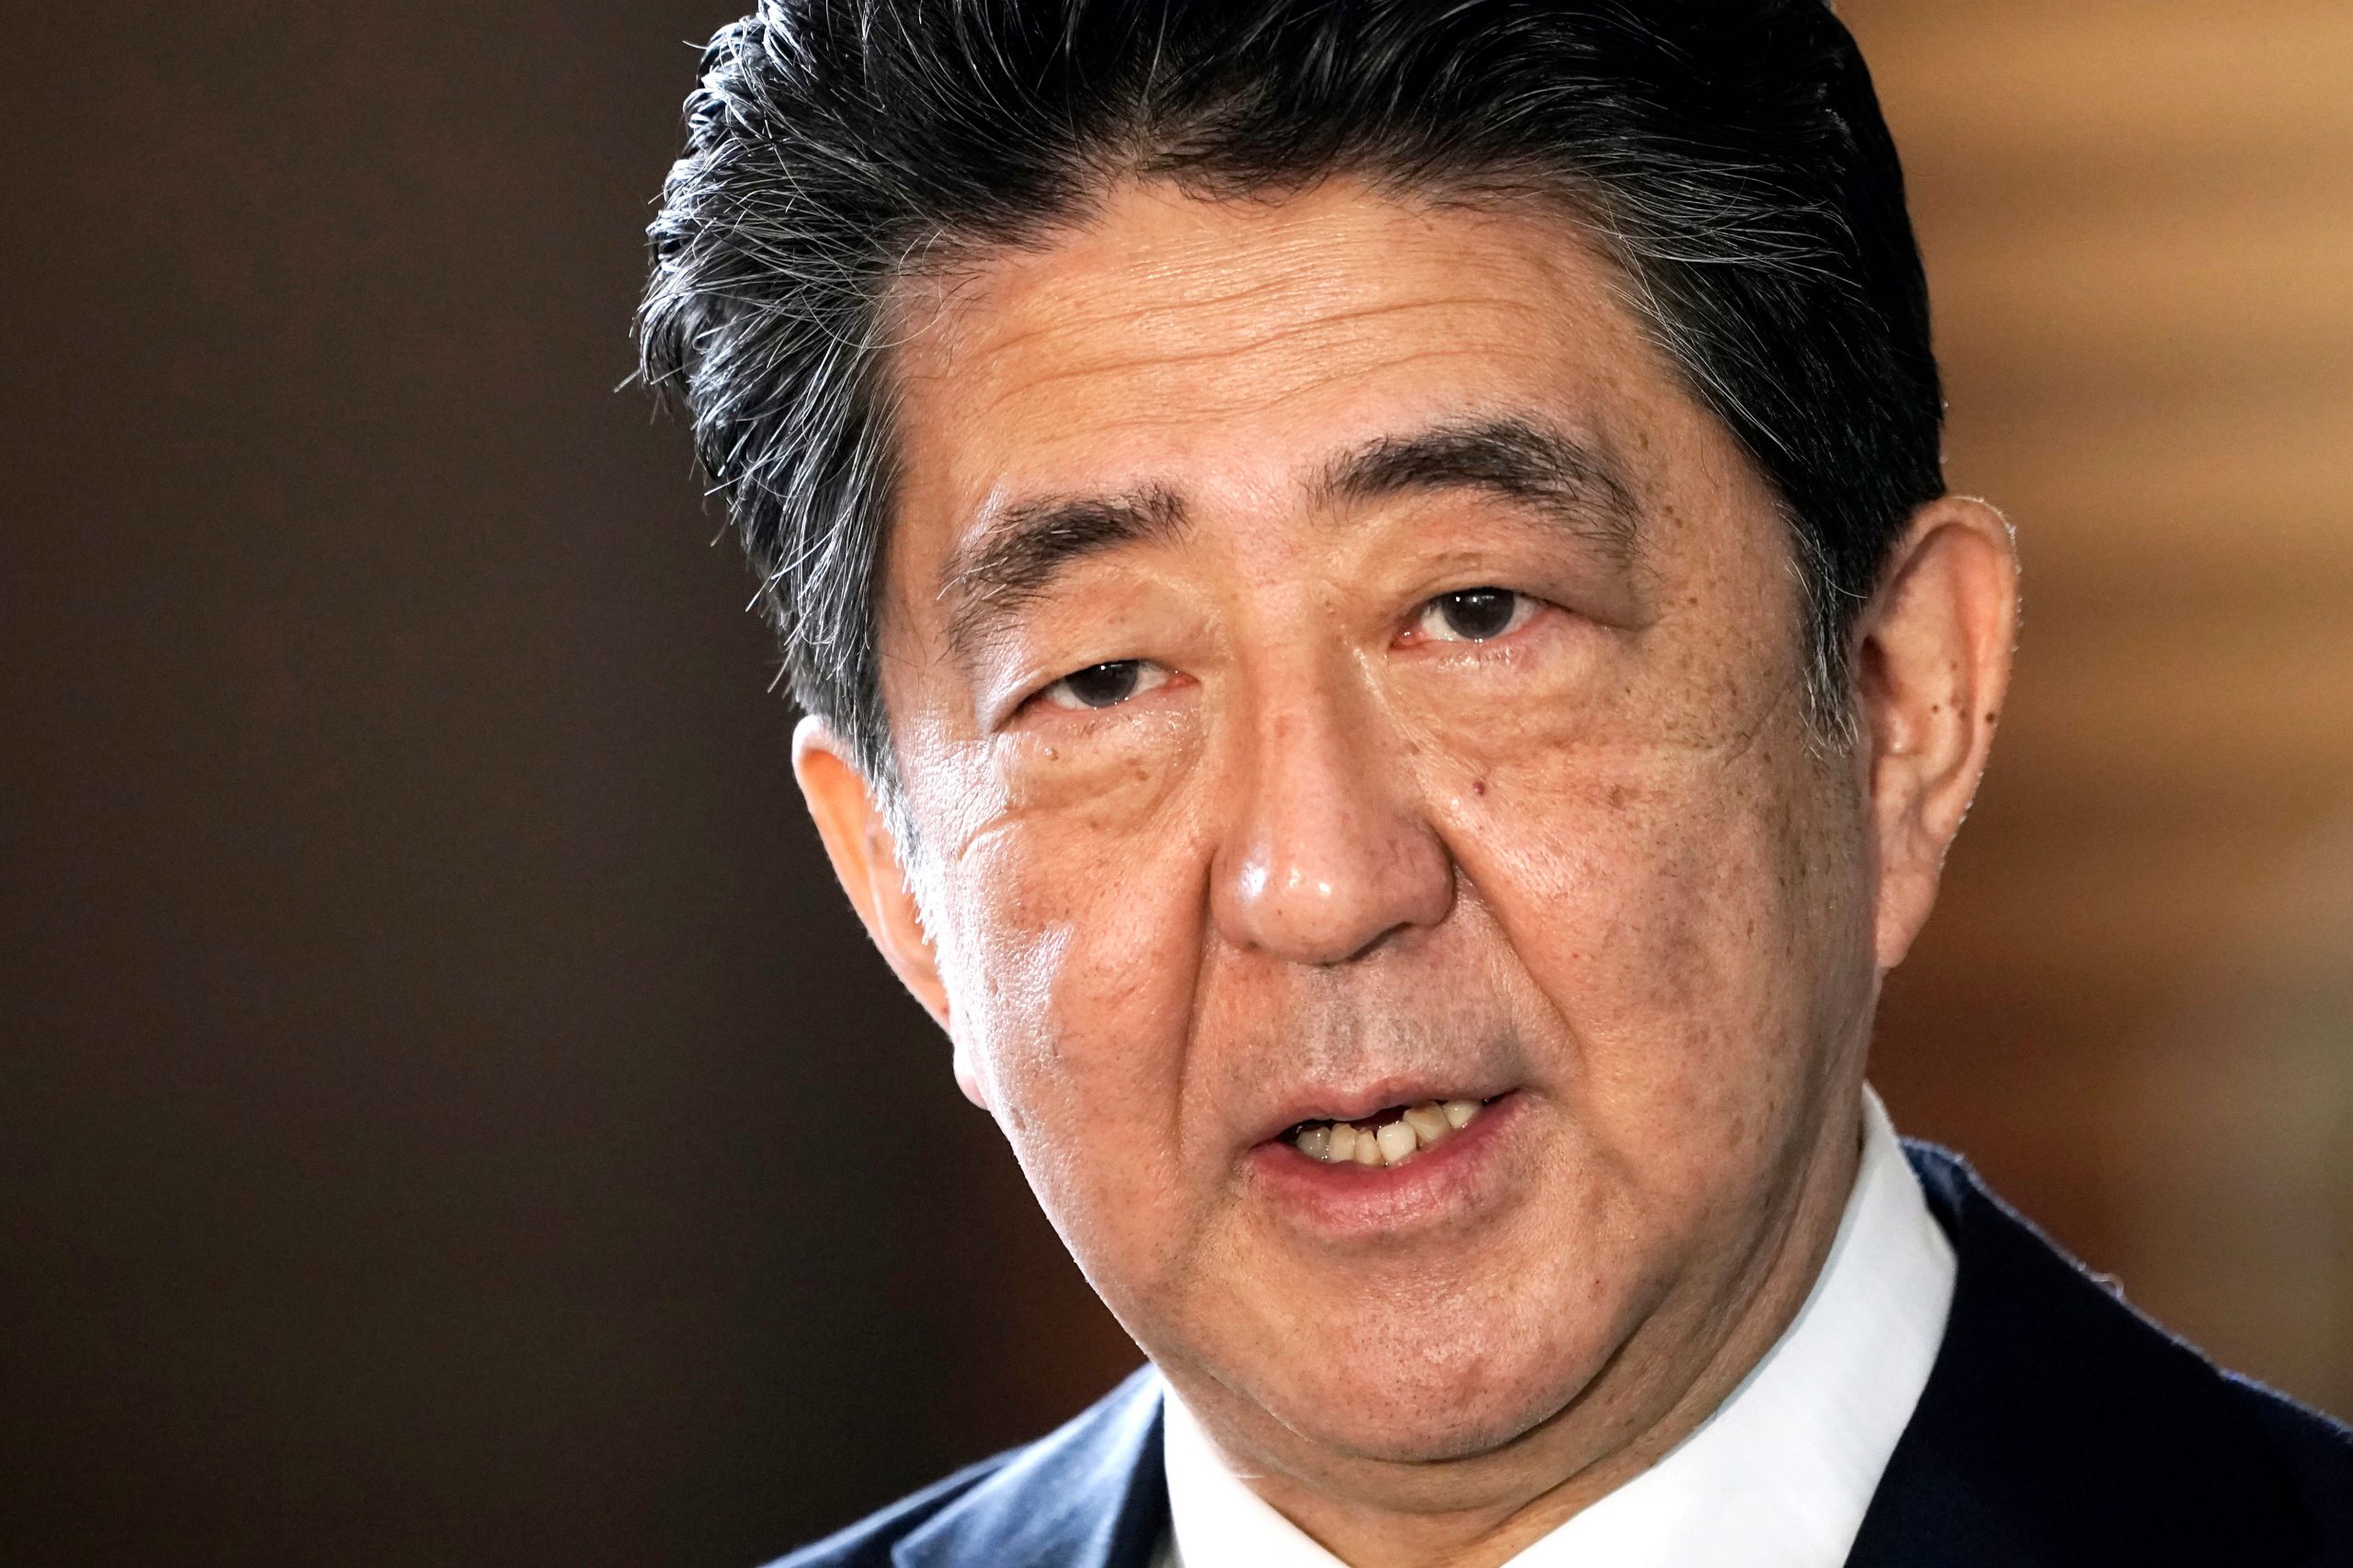 A look at former Japan PM Shinzo Abe’s health history